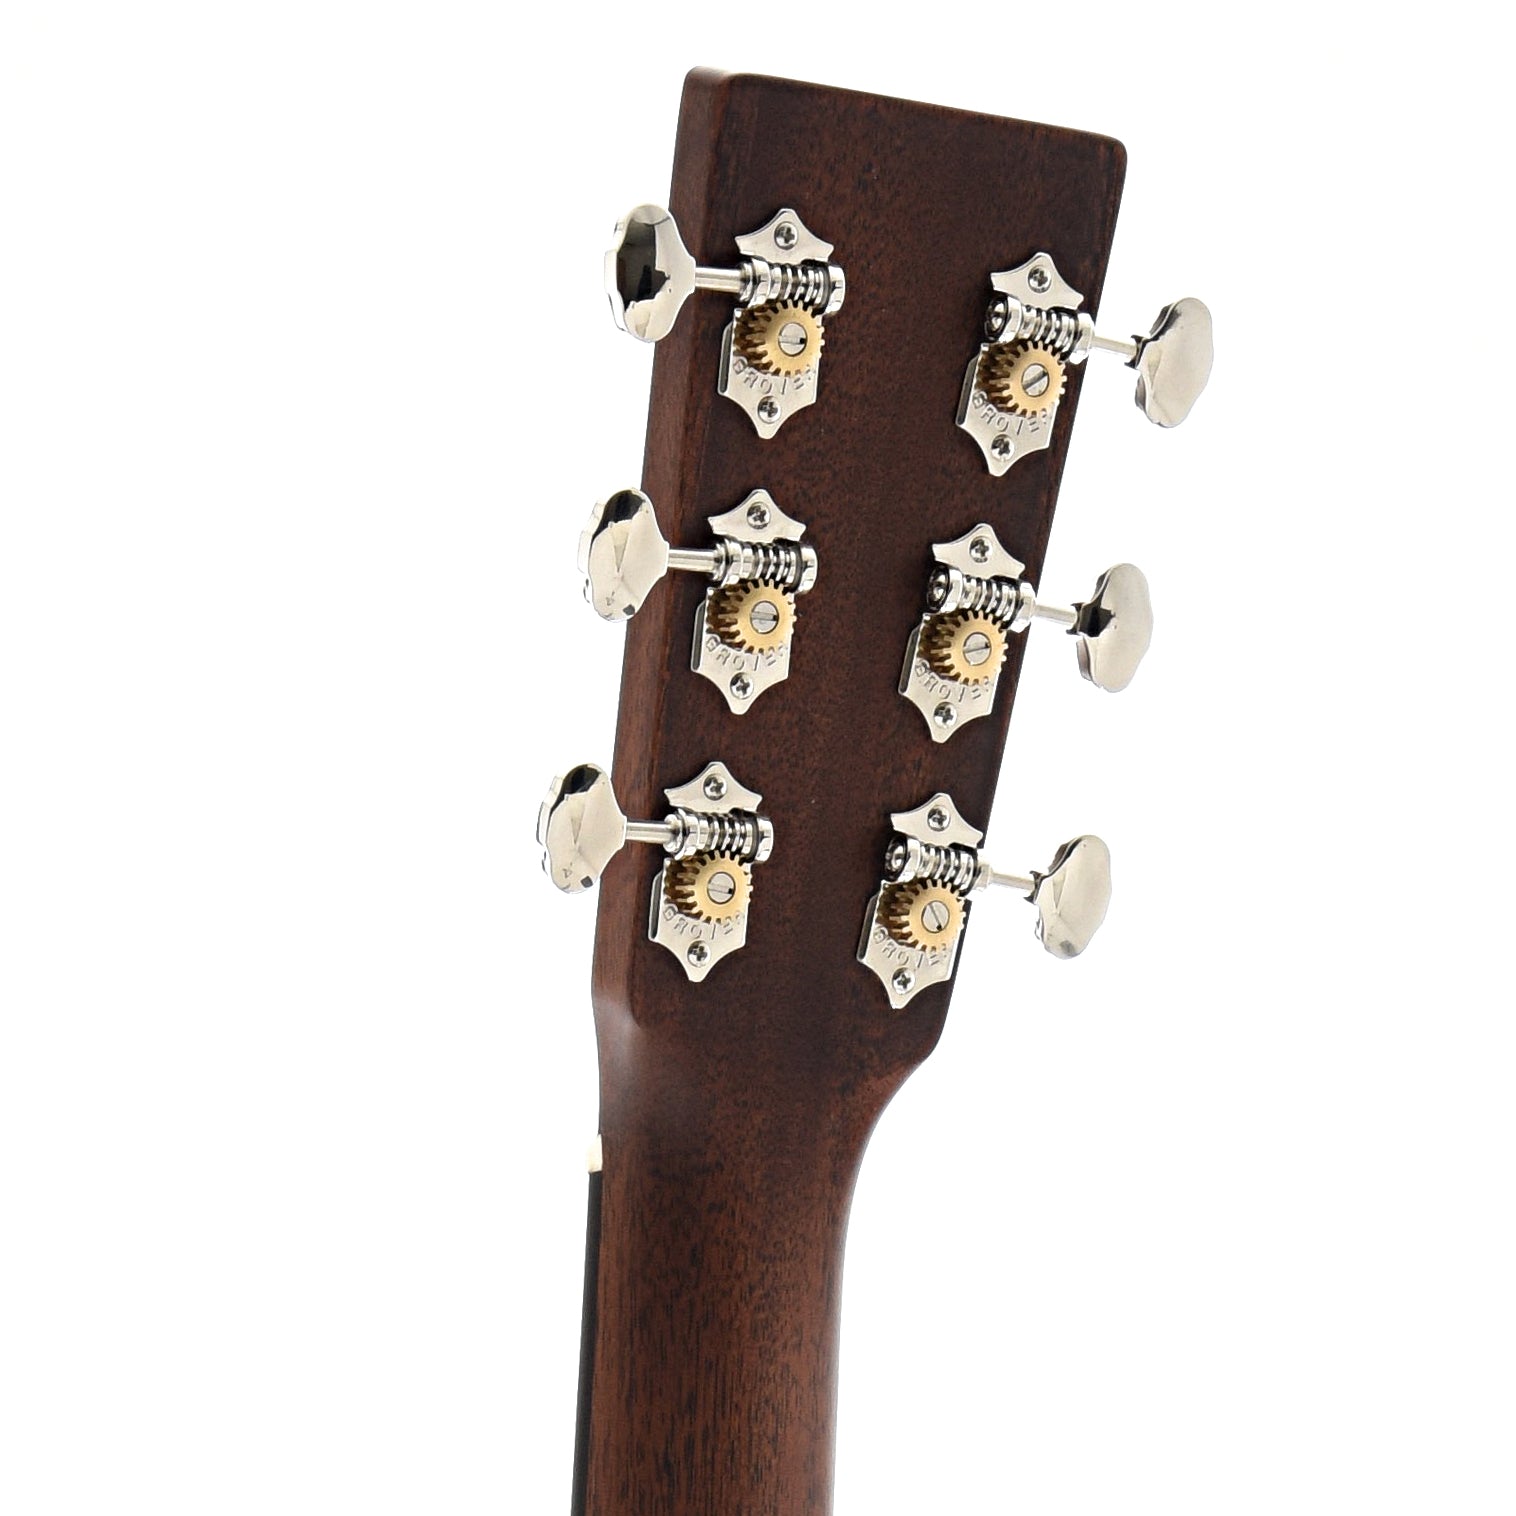 Back Headstock of Martin 0-18 Guitar